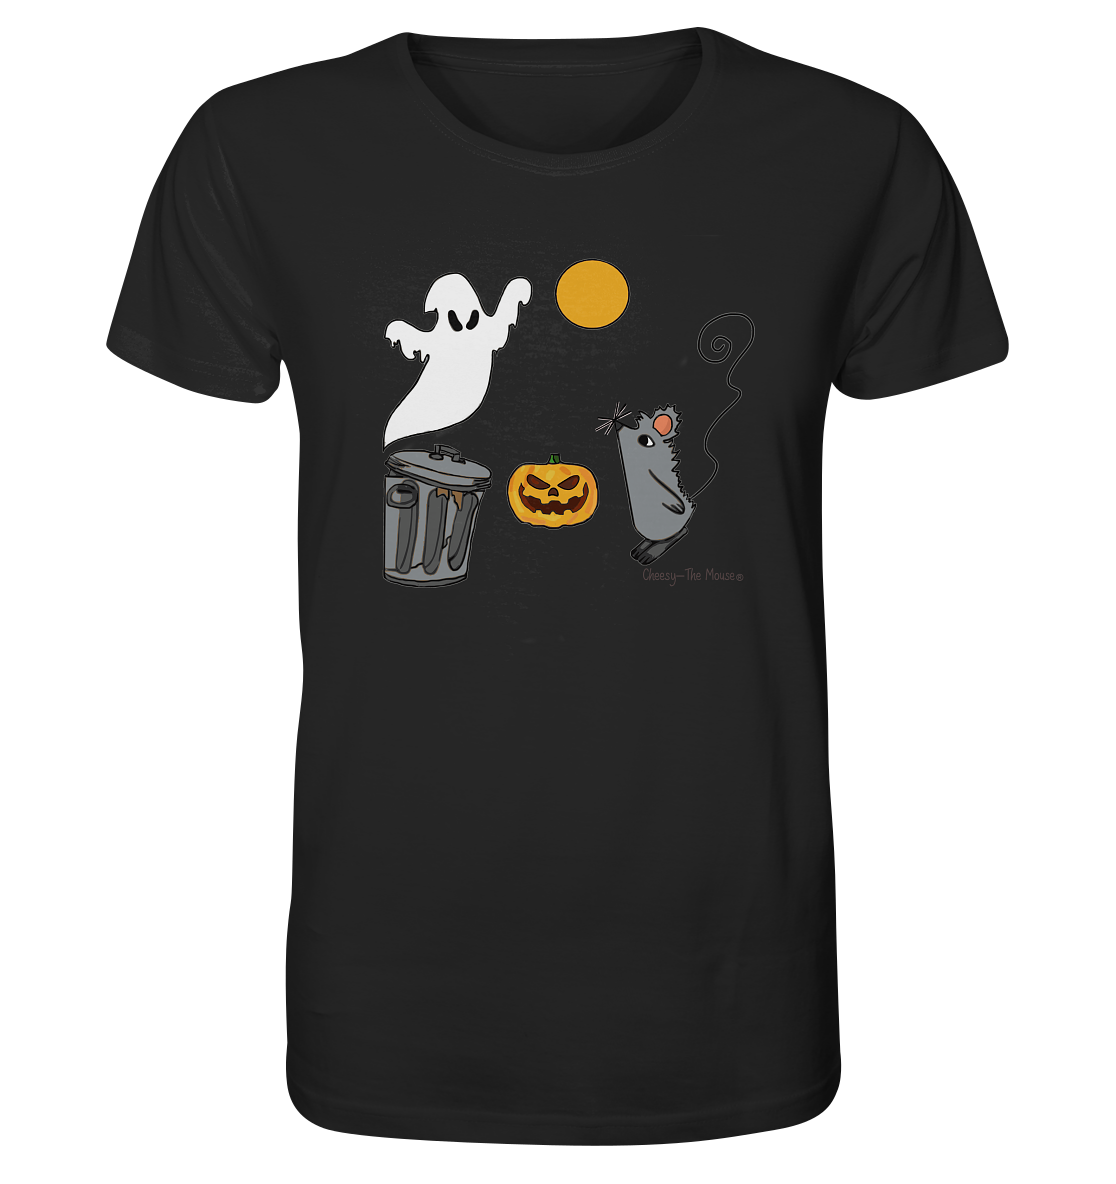 Cheesy -The Mouse® Halloween Midnight Meeting - Organic Shirt